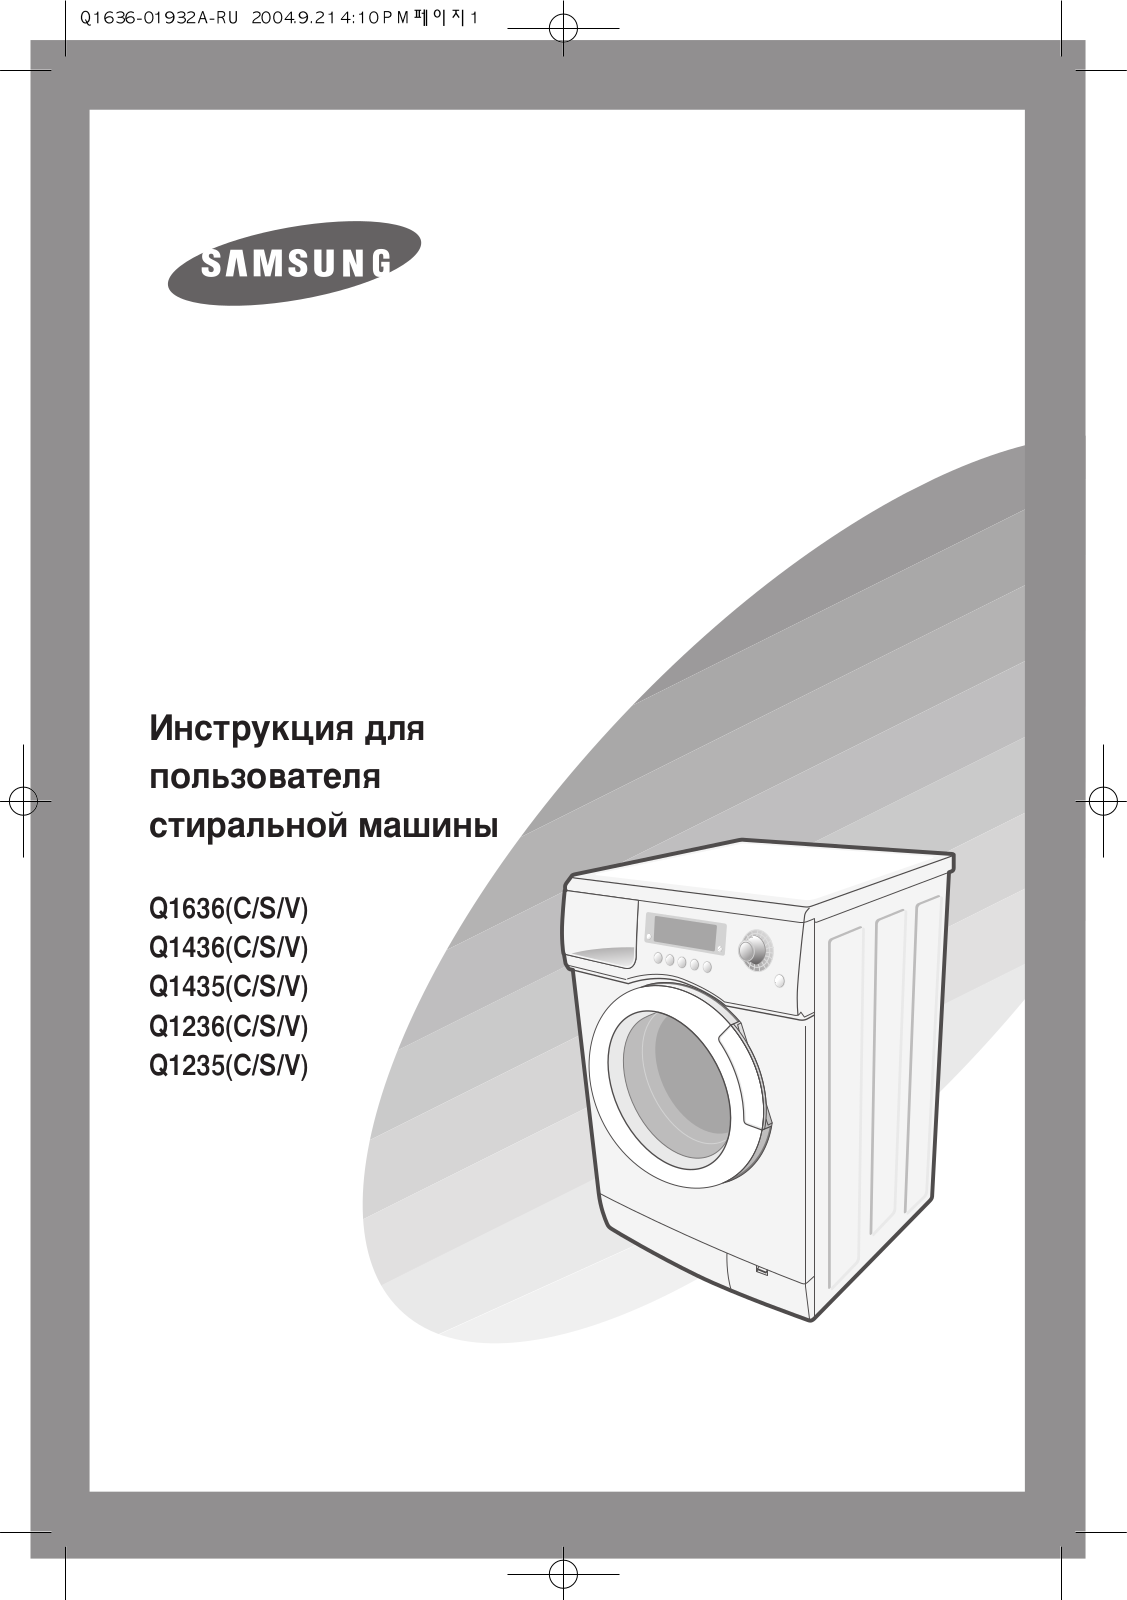 Samsung Q1435V, Q1235 User Manual